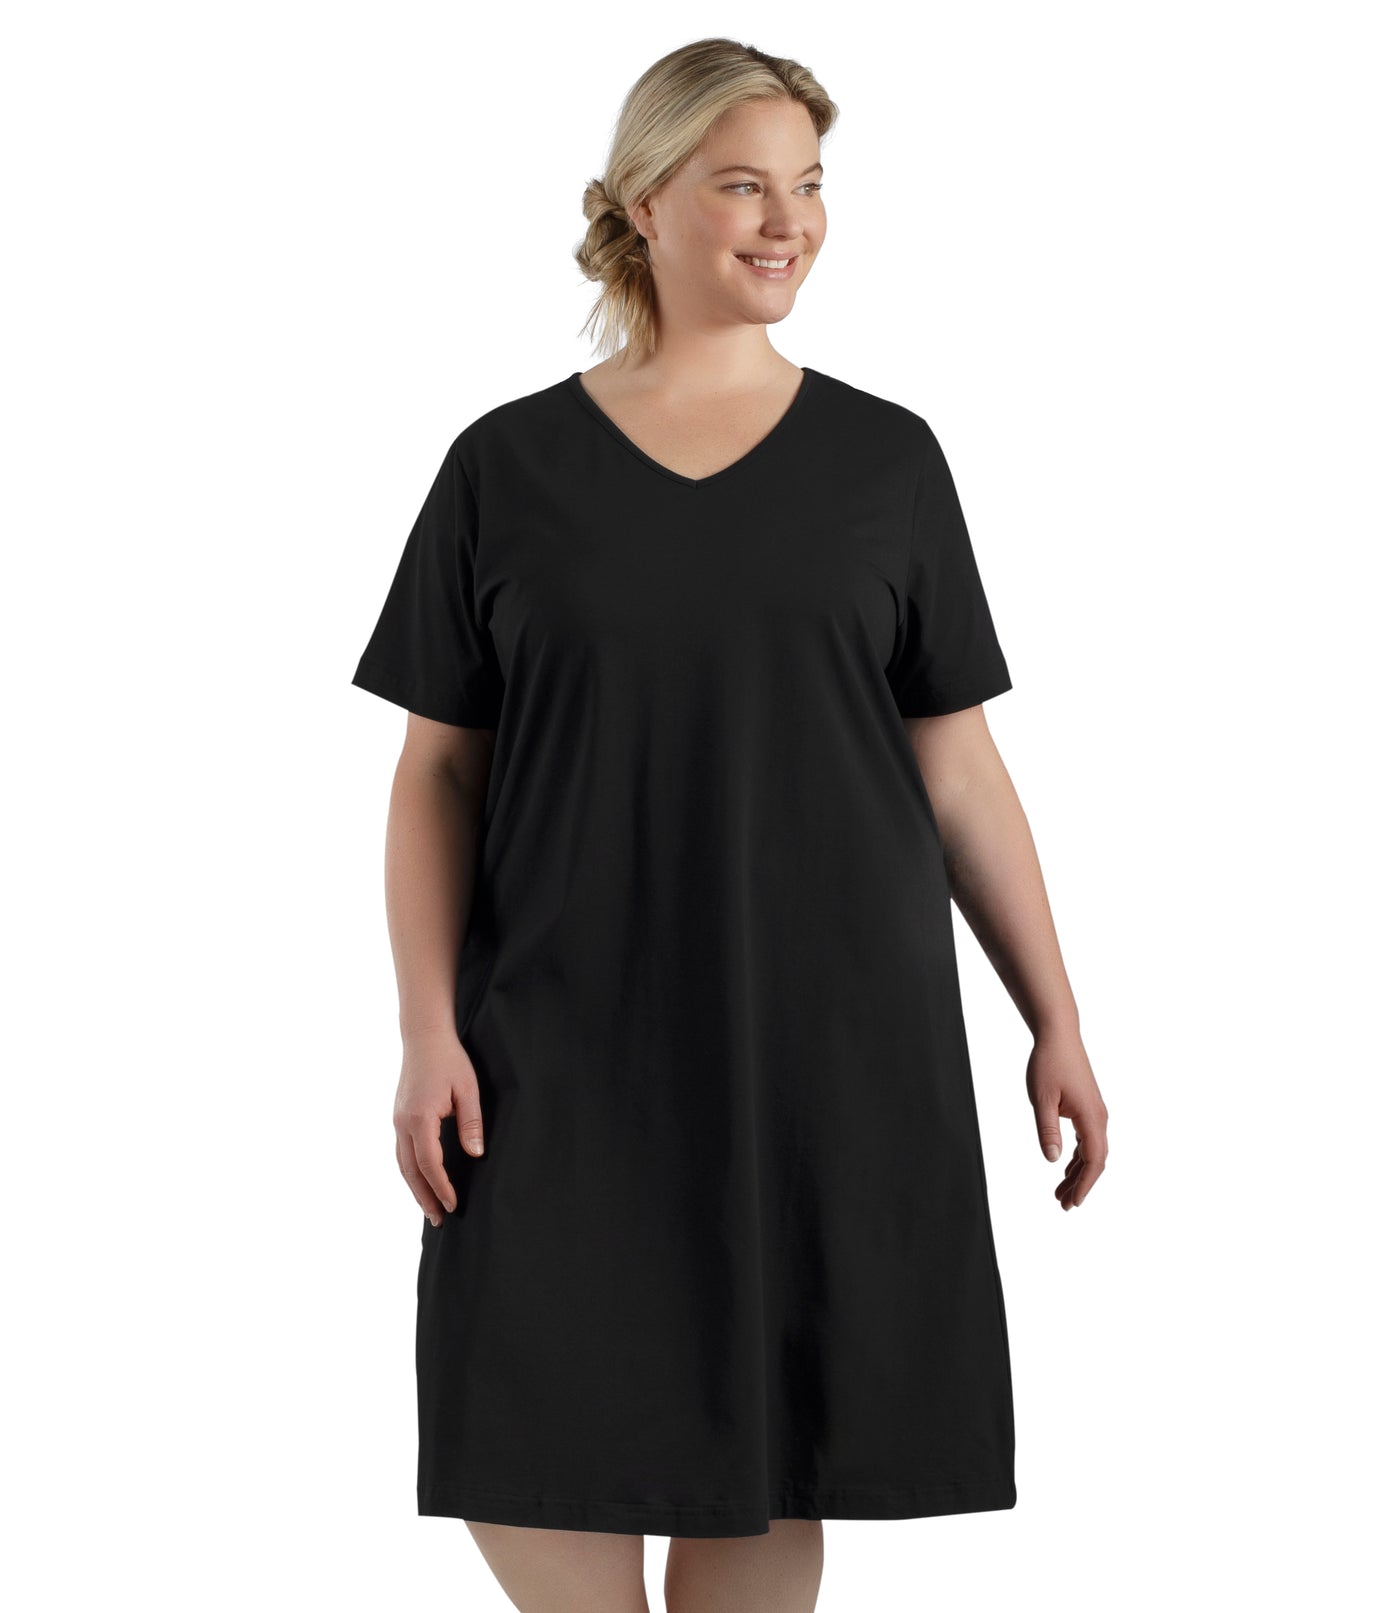 Plus size woman, facing front, wearing JunoActive plus size JunoBliss Sleep Dress in color black. The hem falls just below her knee.